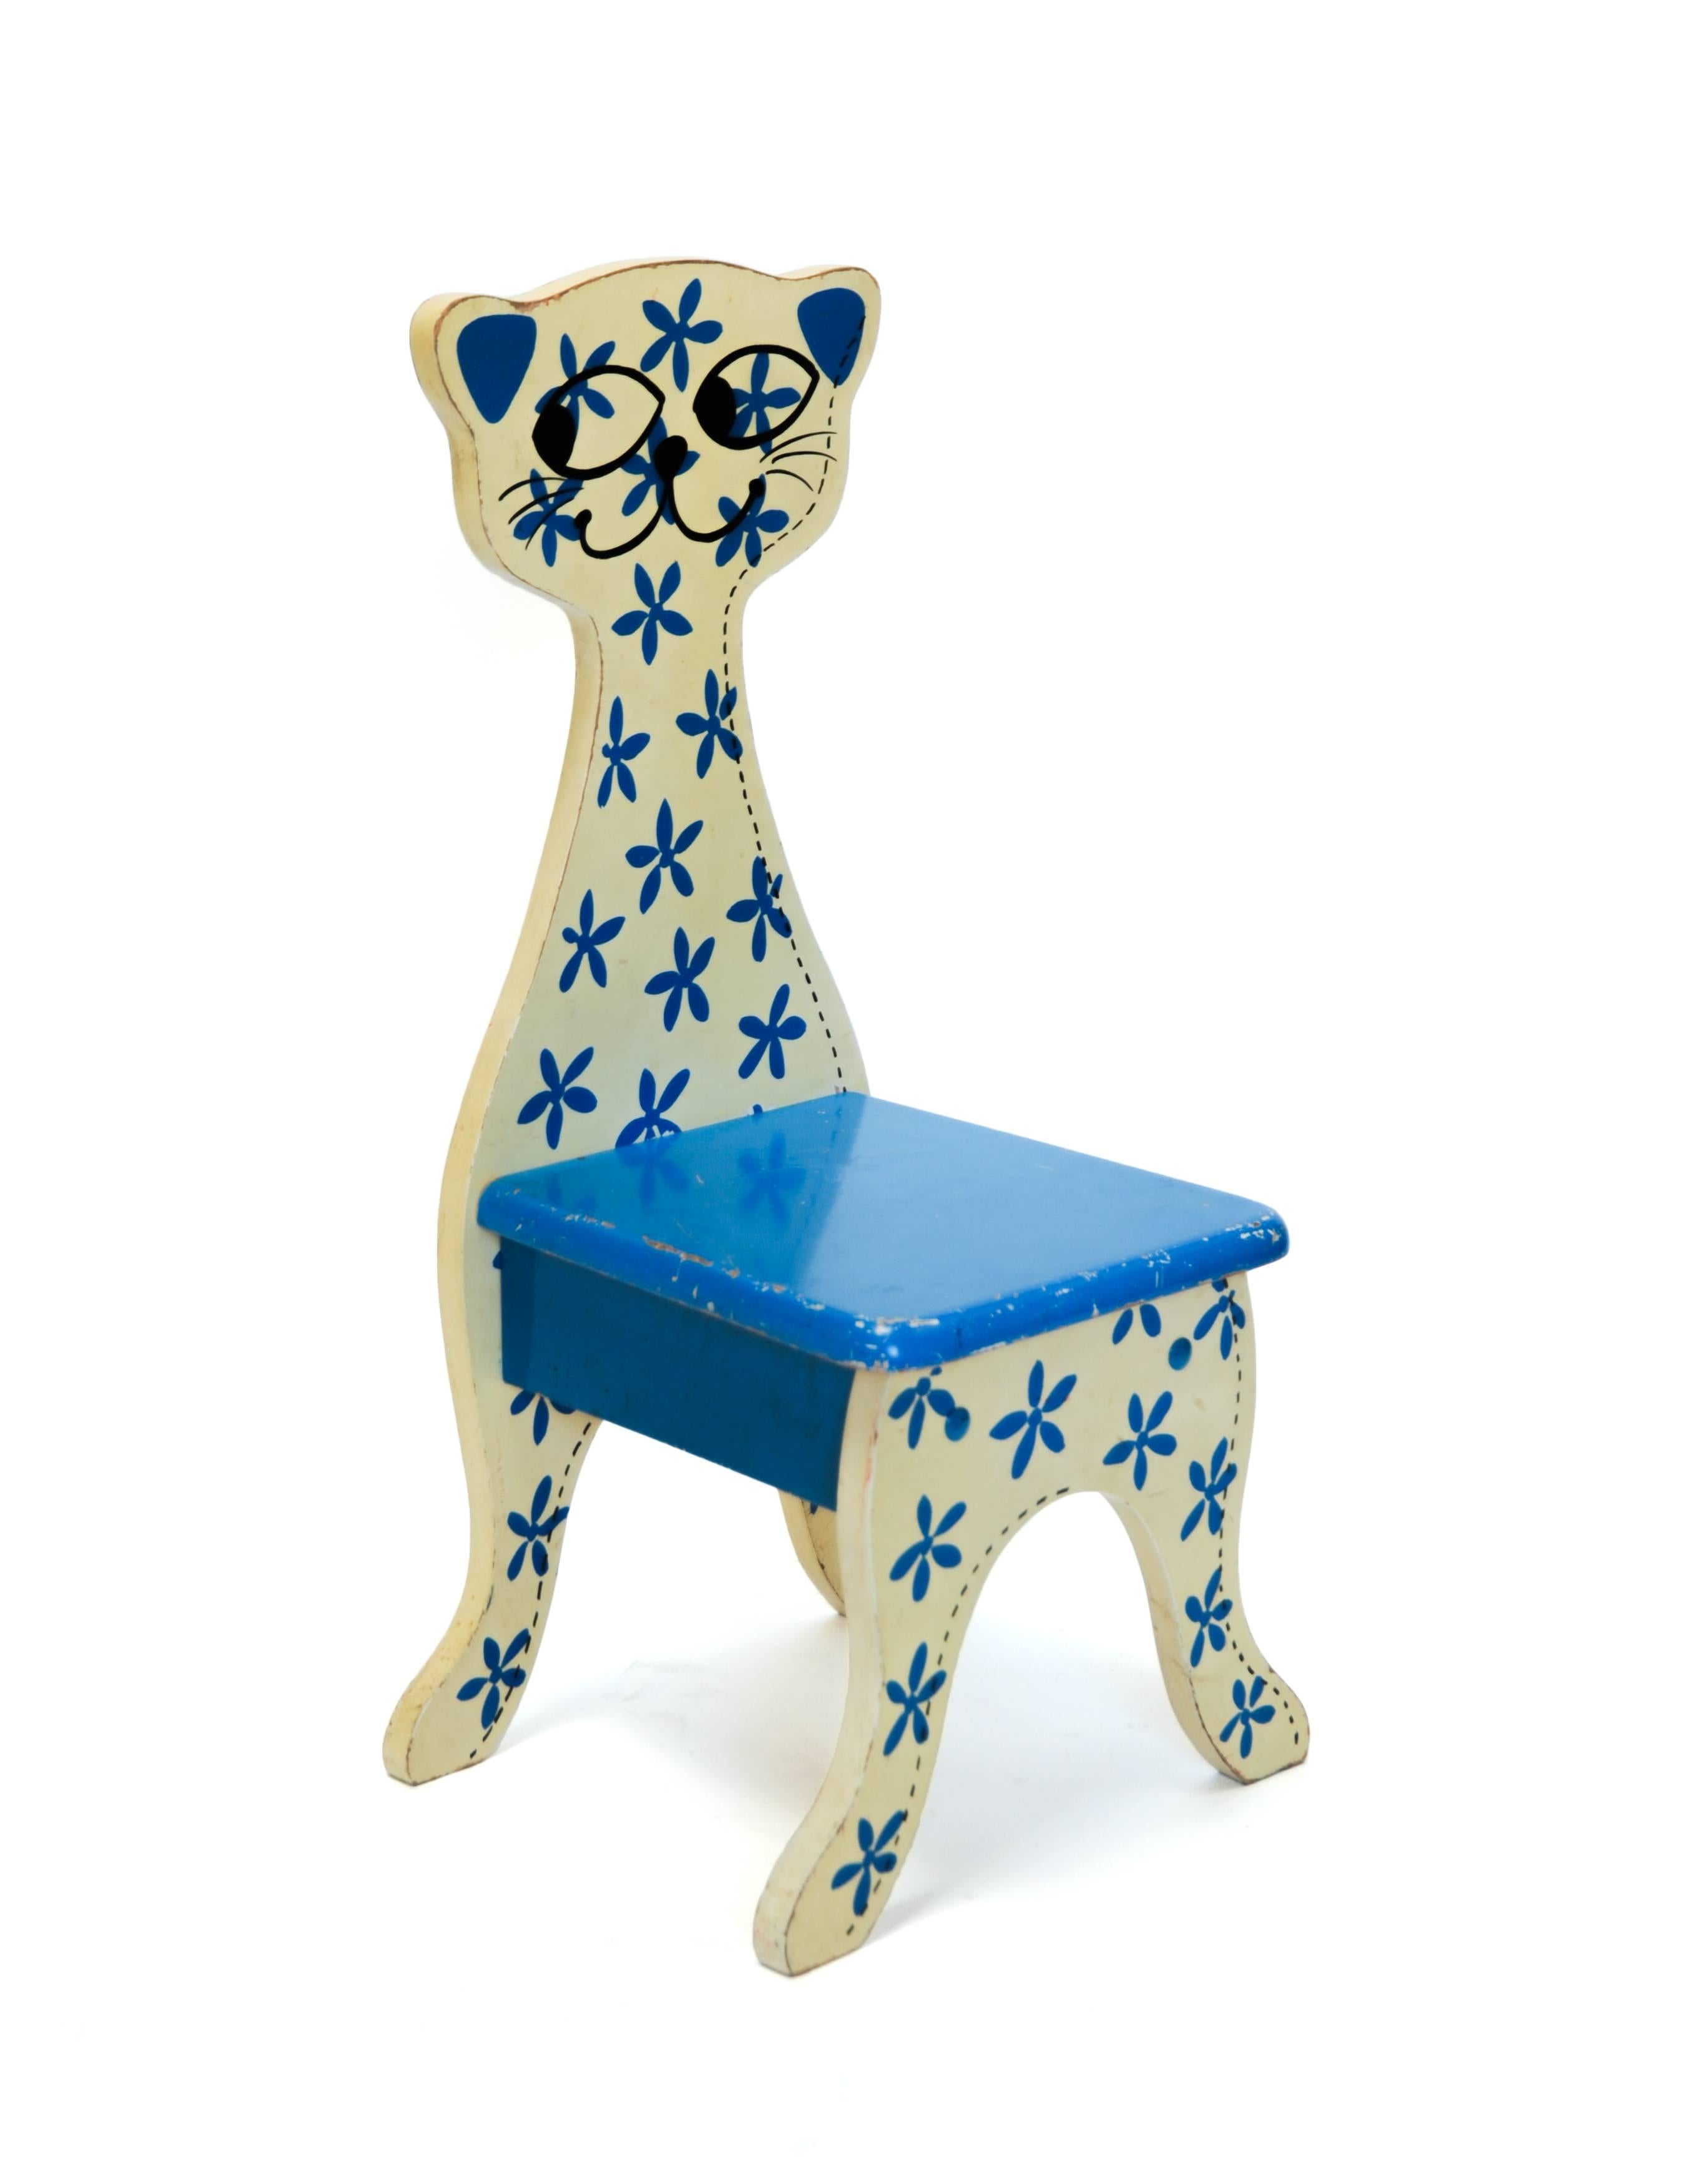 Cat chair, vintage, painted wood composite

Measure: H 23 in x W 10 in x D 10 in
Vintage
Painted wood composite

  